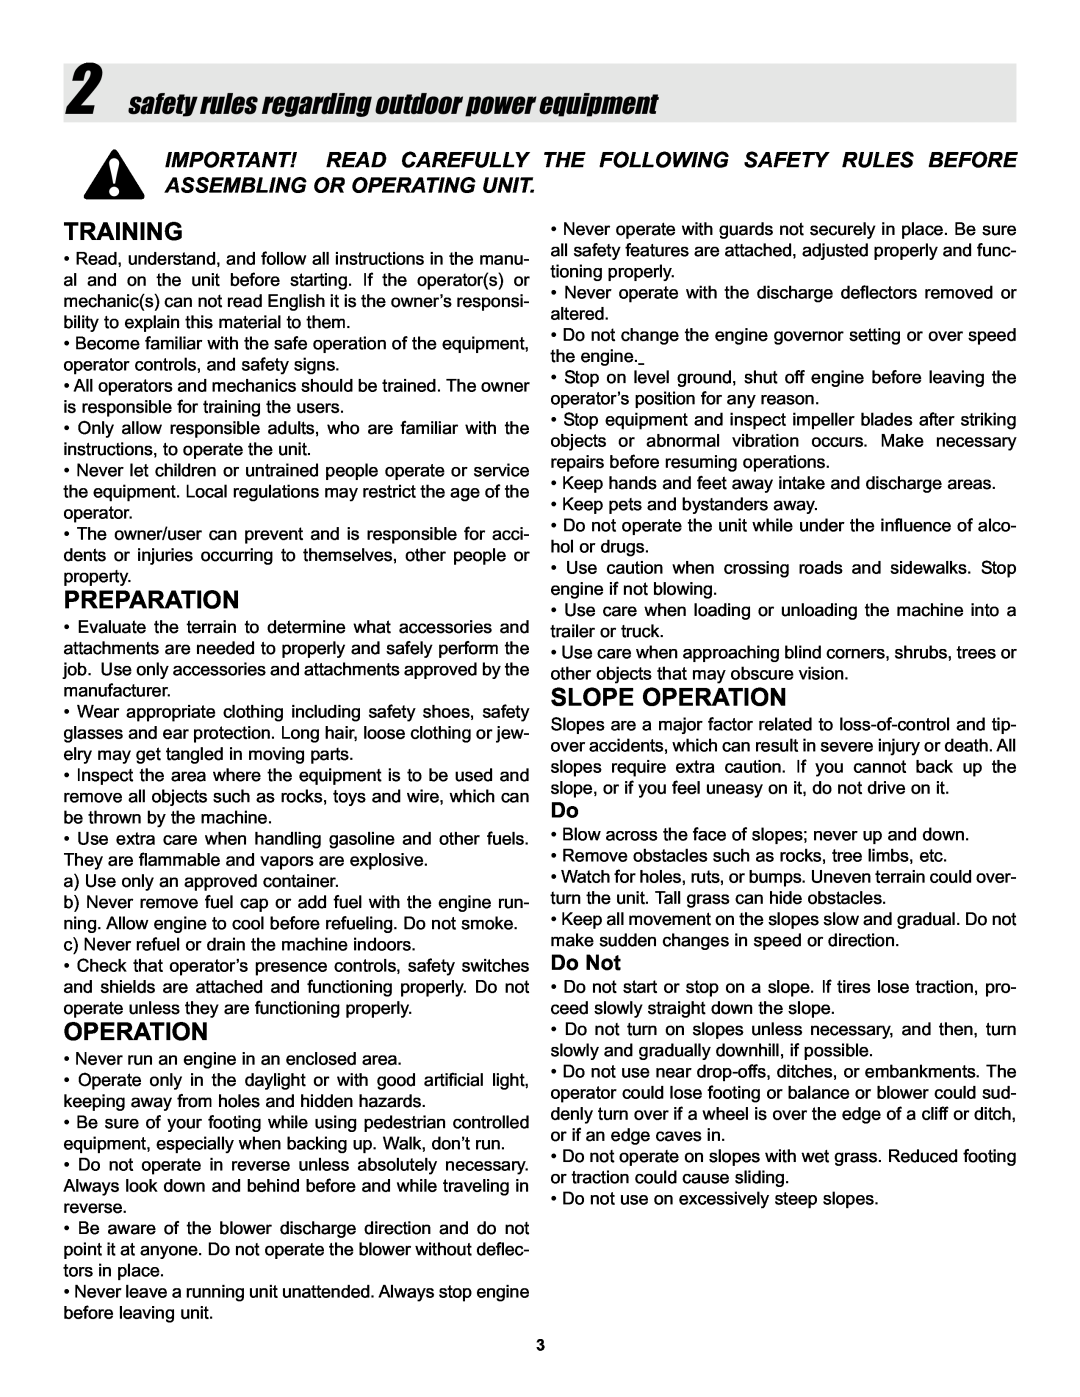 Snapper LBC6152BV 2safety rules regarding outdoor power equipment, Training, Preparation, Slope Operation, Do Not 